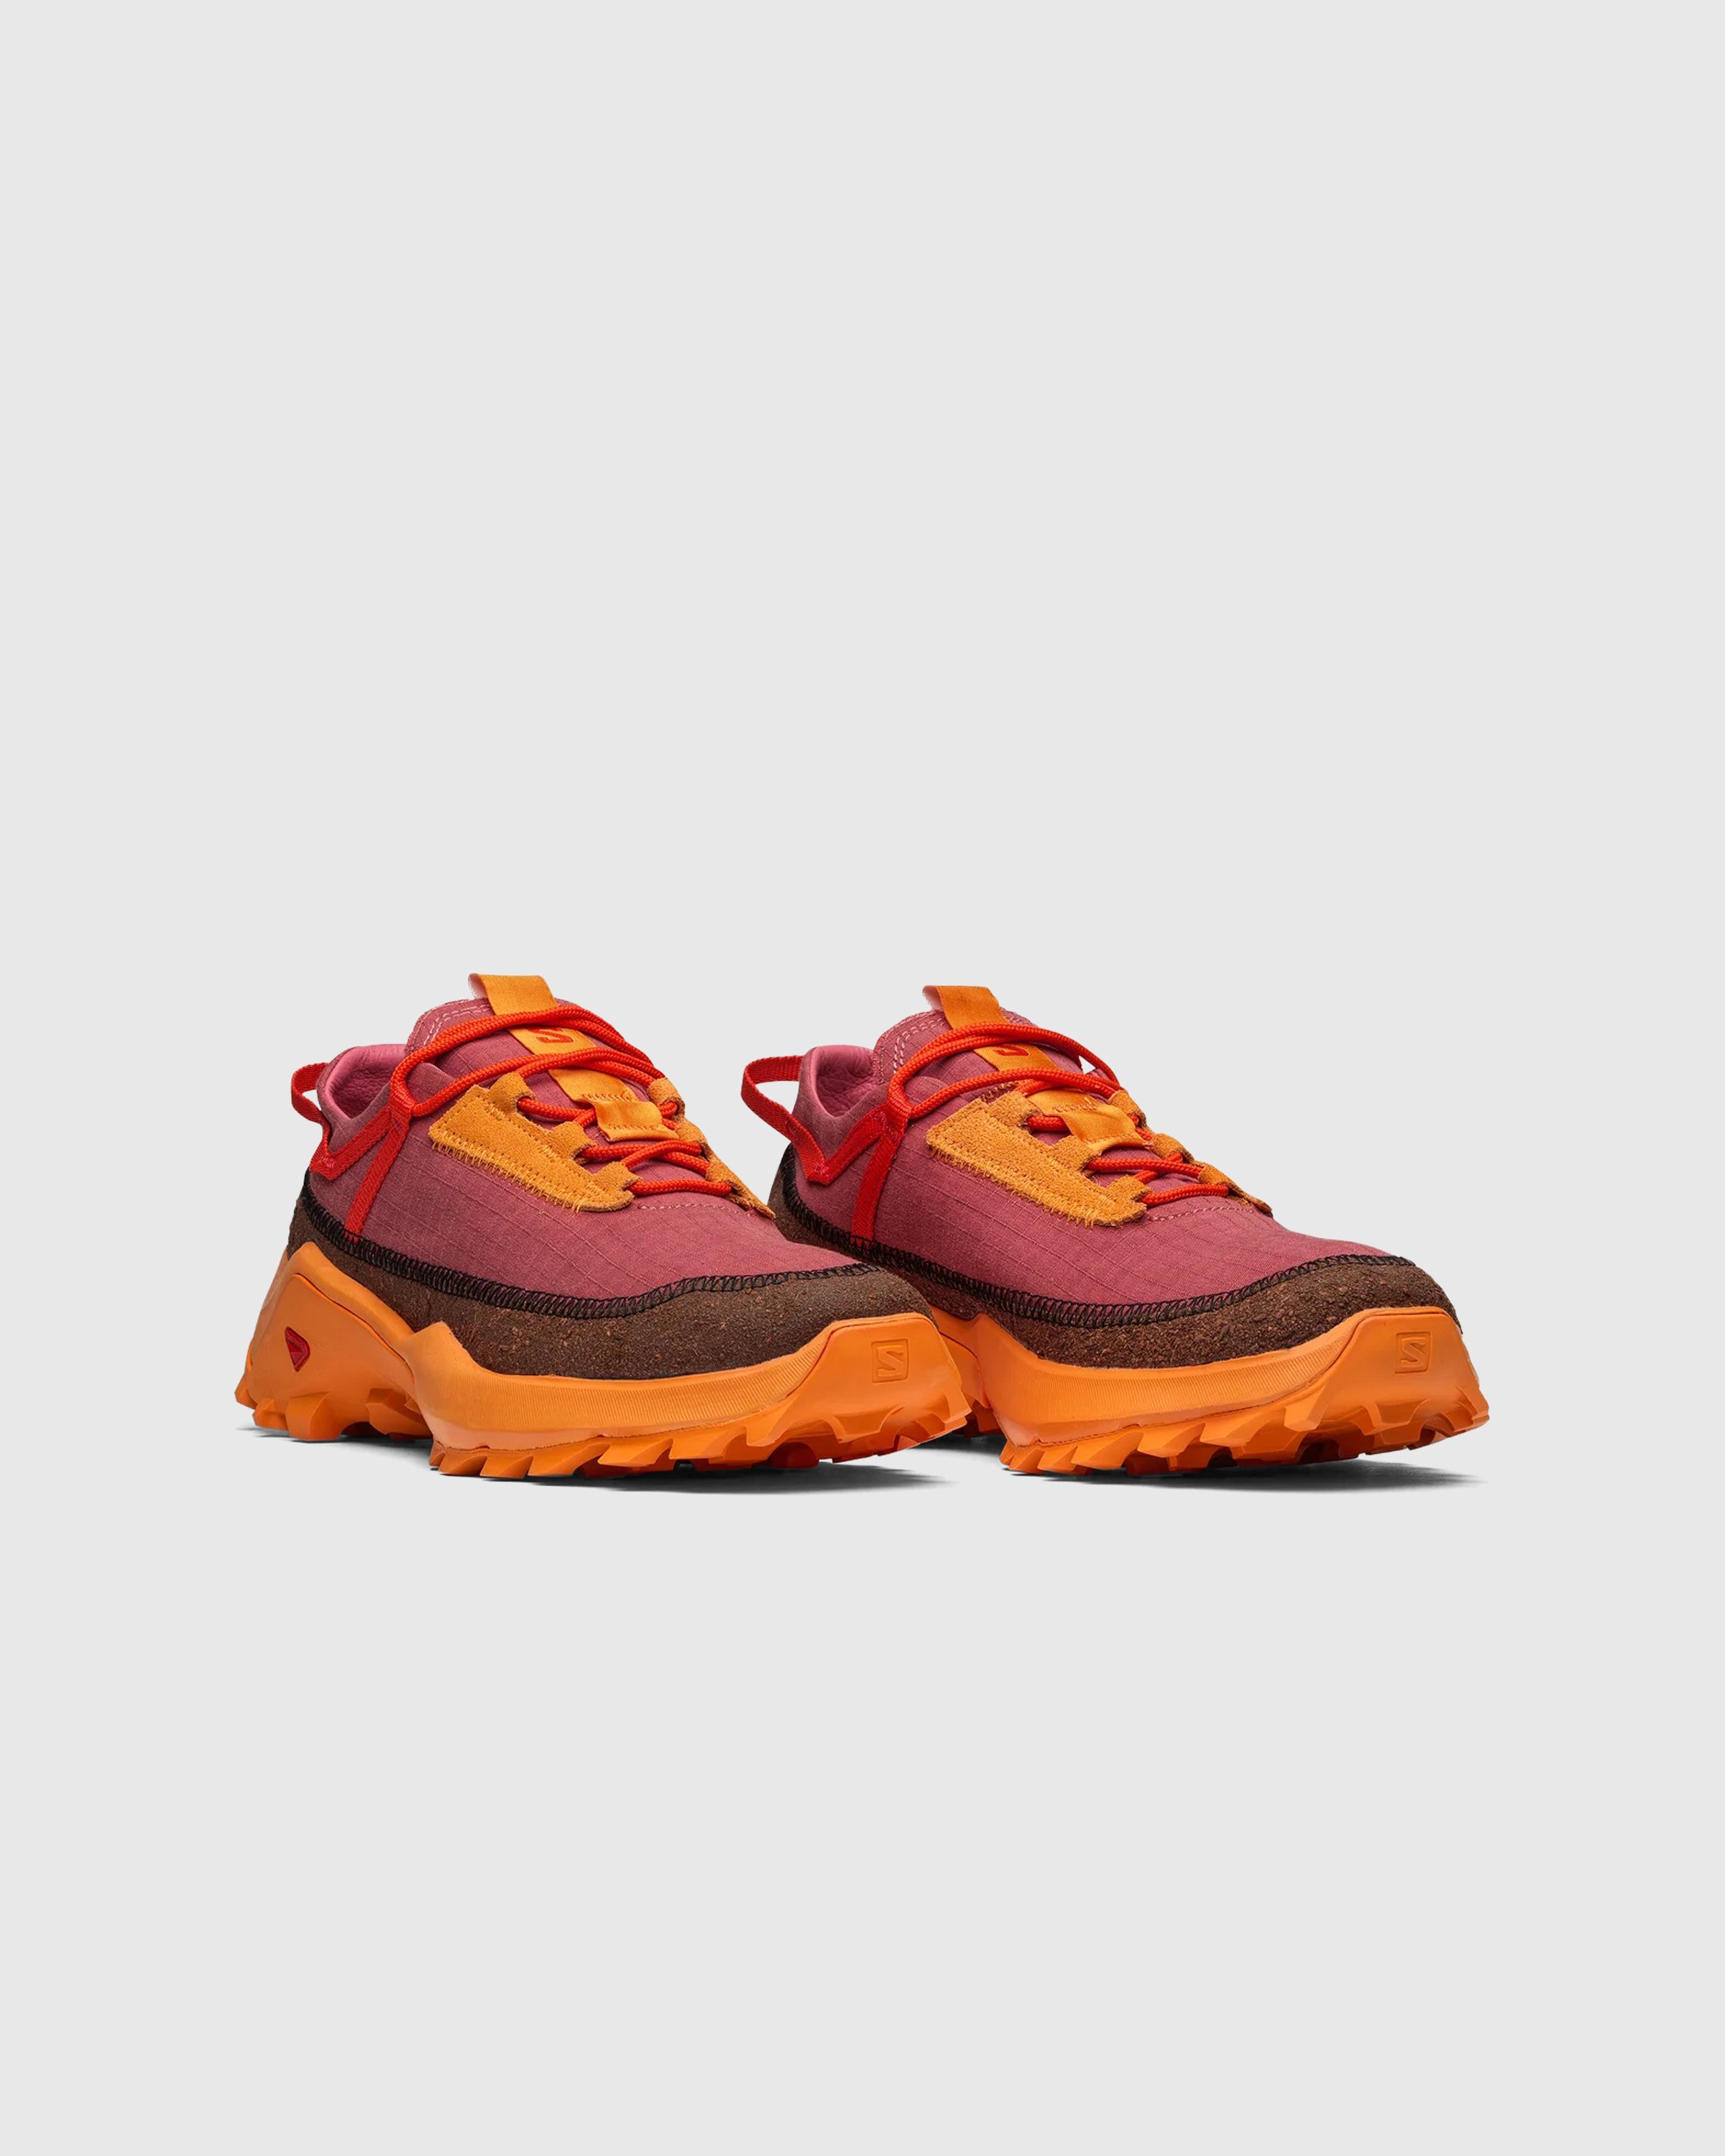 RANRA x Salomon - CROSS PRO BETTER RUBIA - Footwear - Orange - Image 2